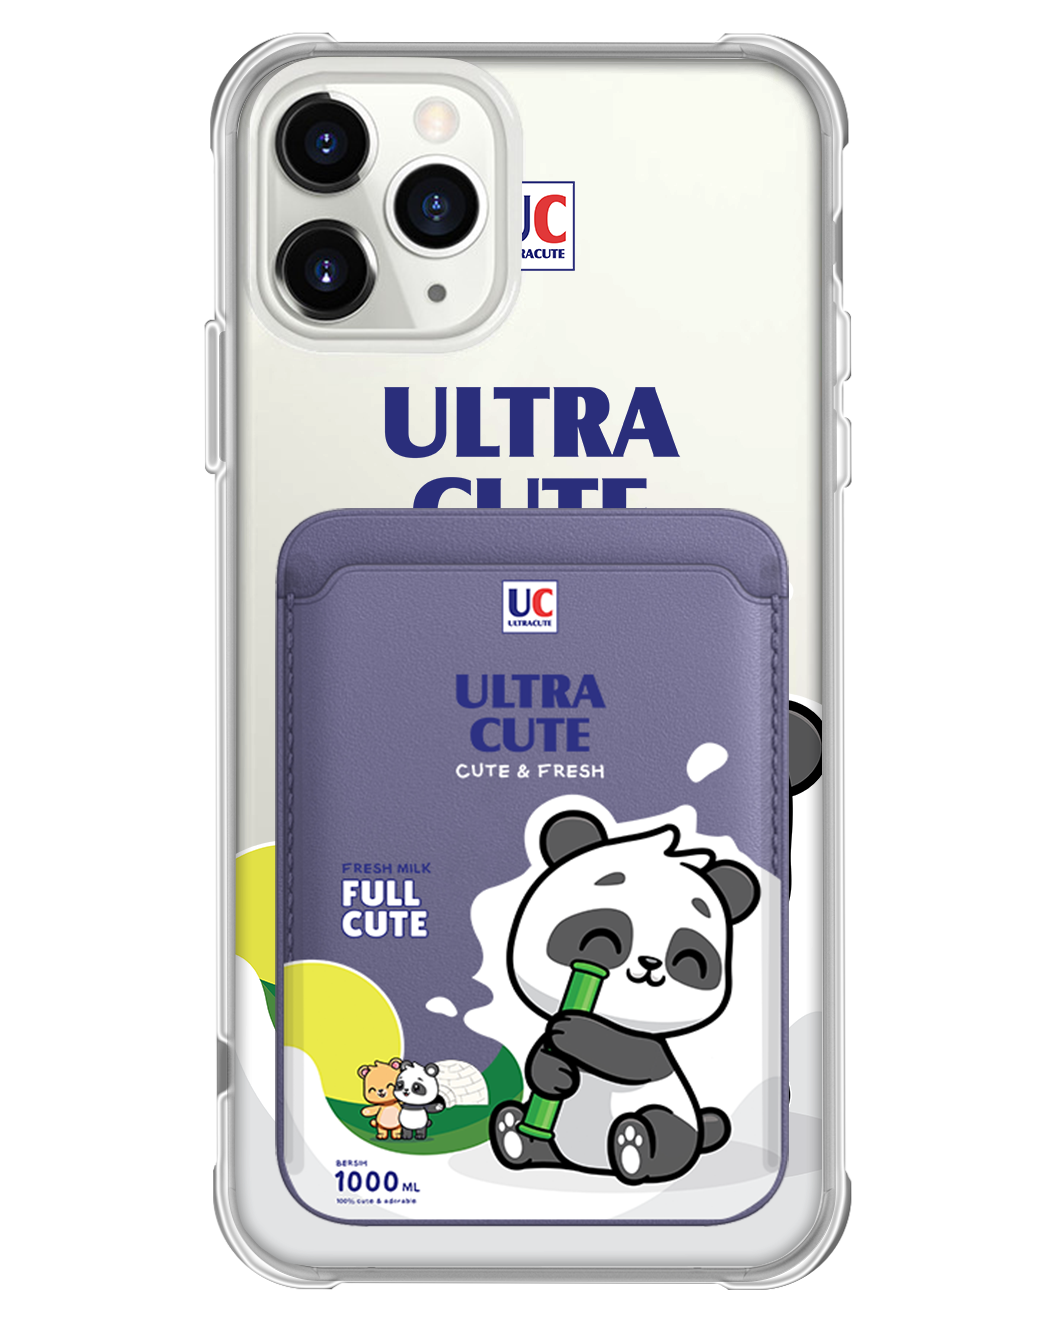 iPhone Magnetic Wallet Case - Ultracute